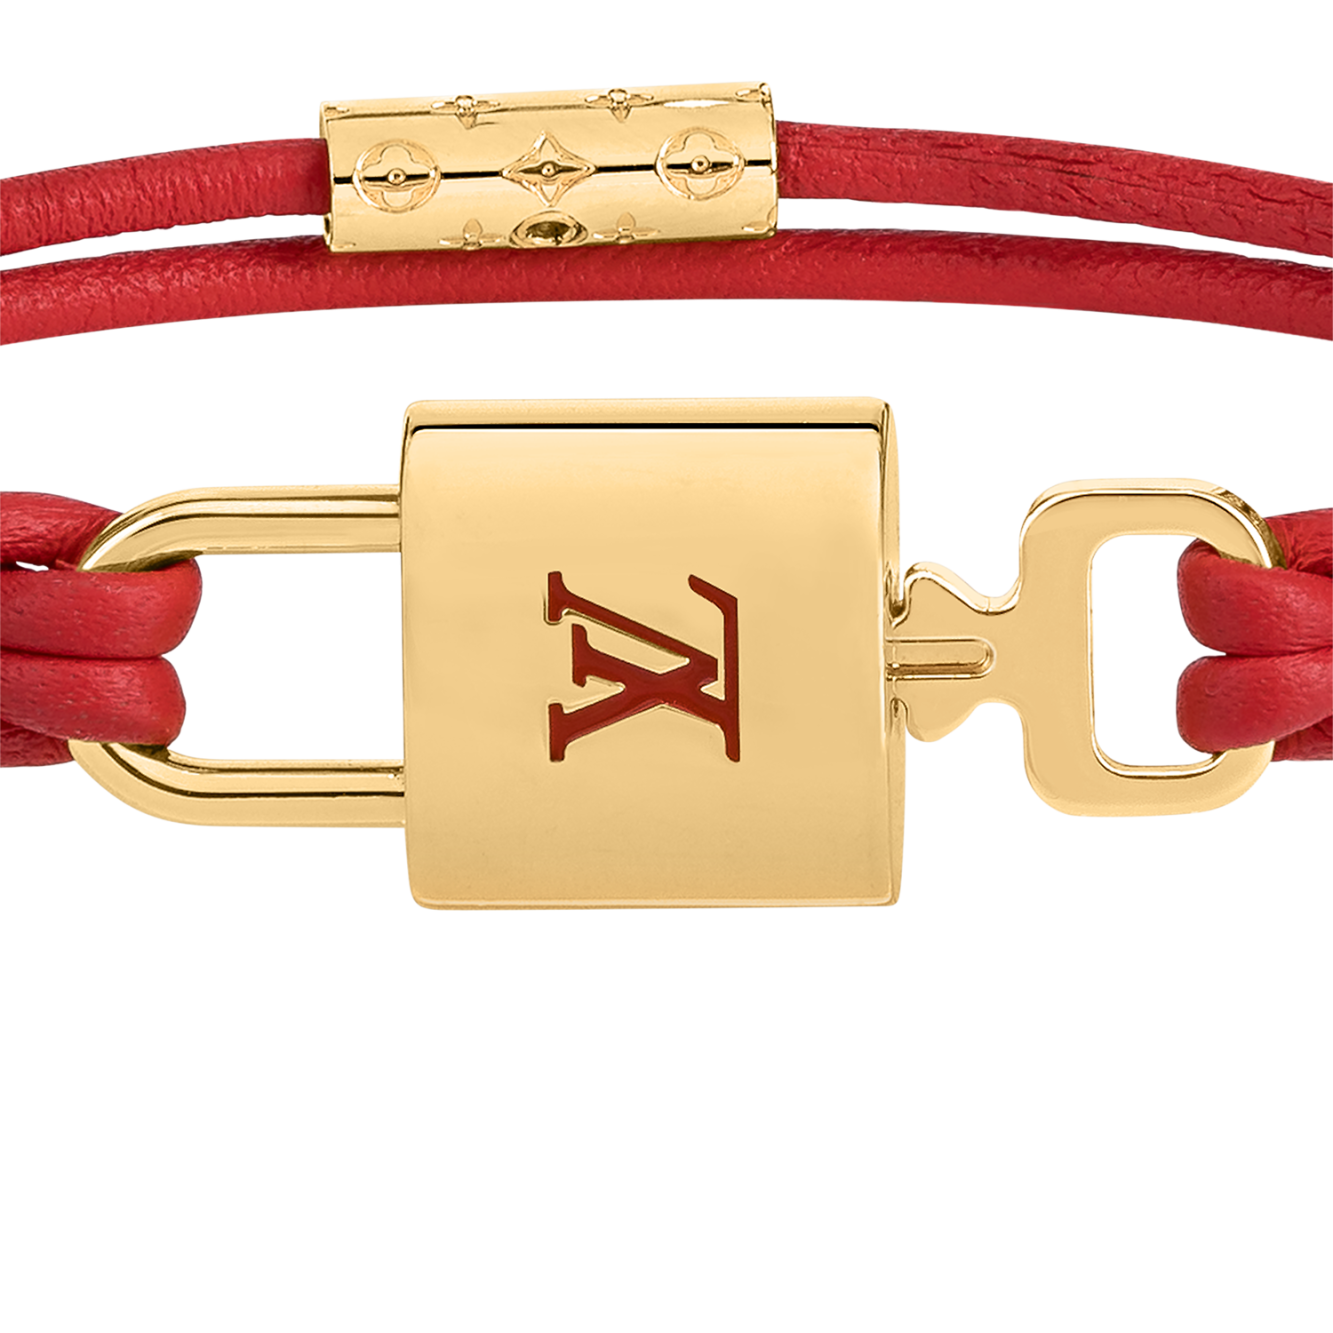 Fasten Your LV Bracelet Monogram - Accessories